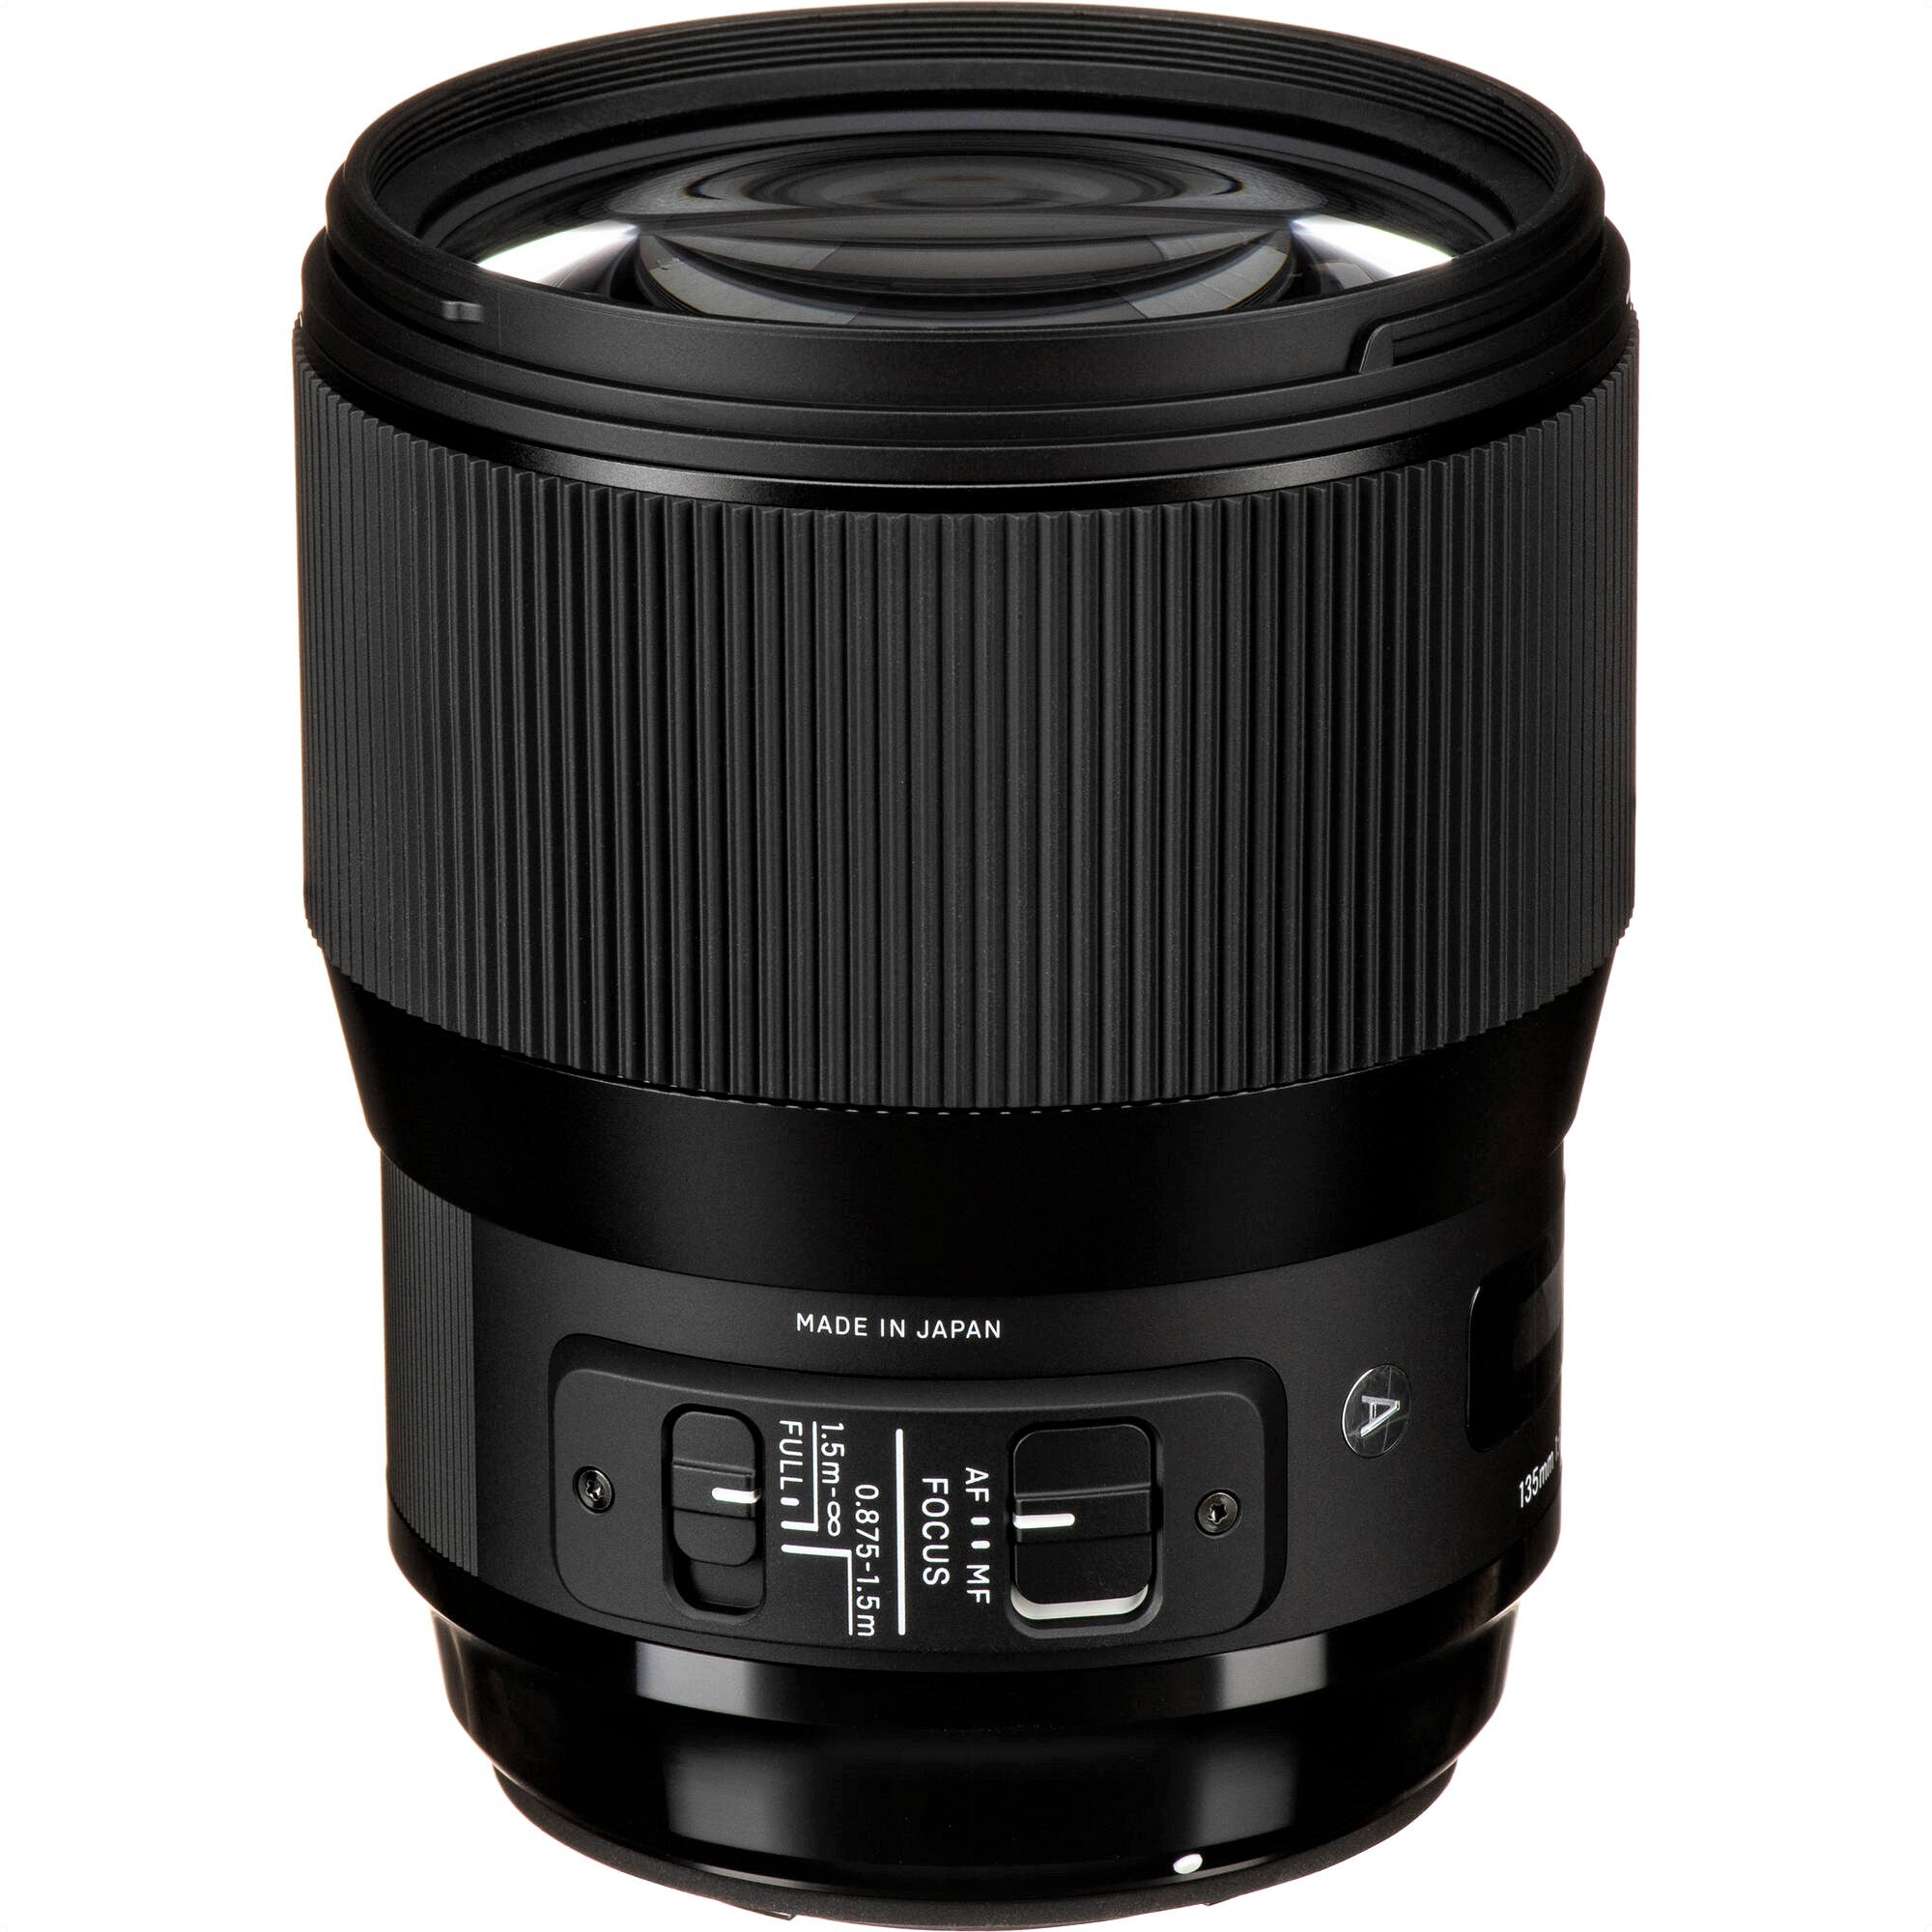 Sigma 135mm F1.8 DG HSM Art Lens for Canon EF